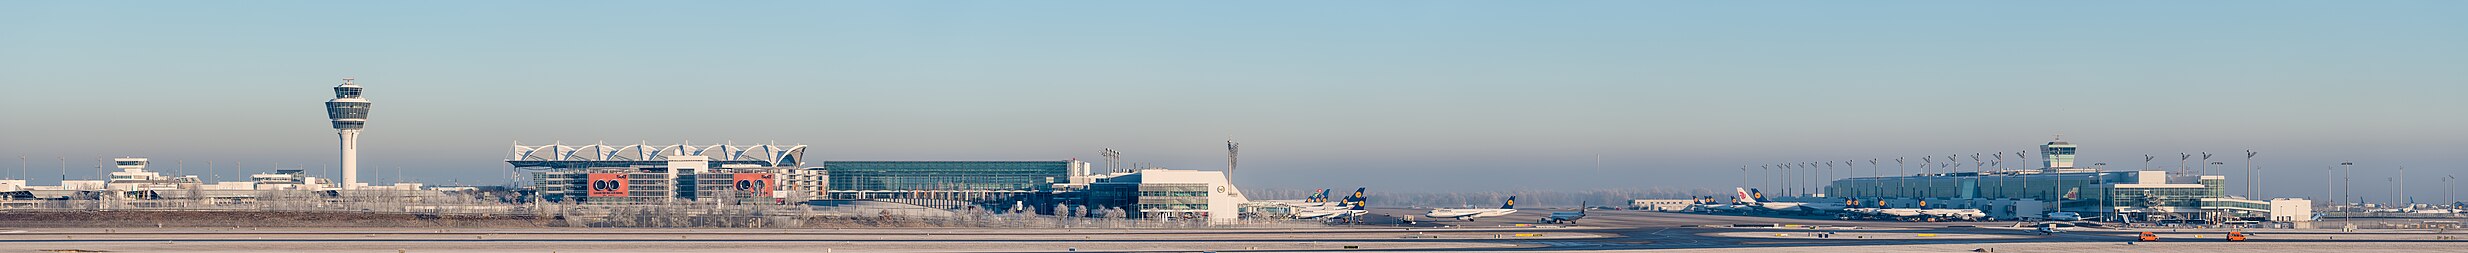 English: Munich Airport (IATA: MUC; ICAO: EDDM) Terminal 2 and Tower in February 2015. Deutsch: Der Flughafen München (IATA: MUC; ICAO: EDDM) Terminal 2 und Tower im Februar 2015.